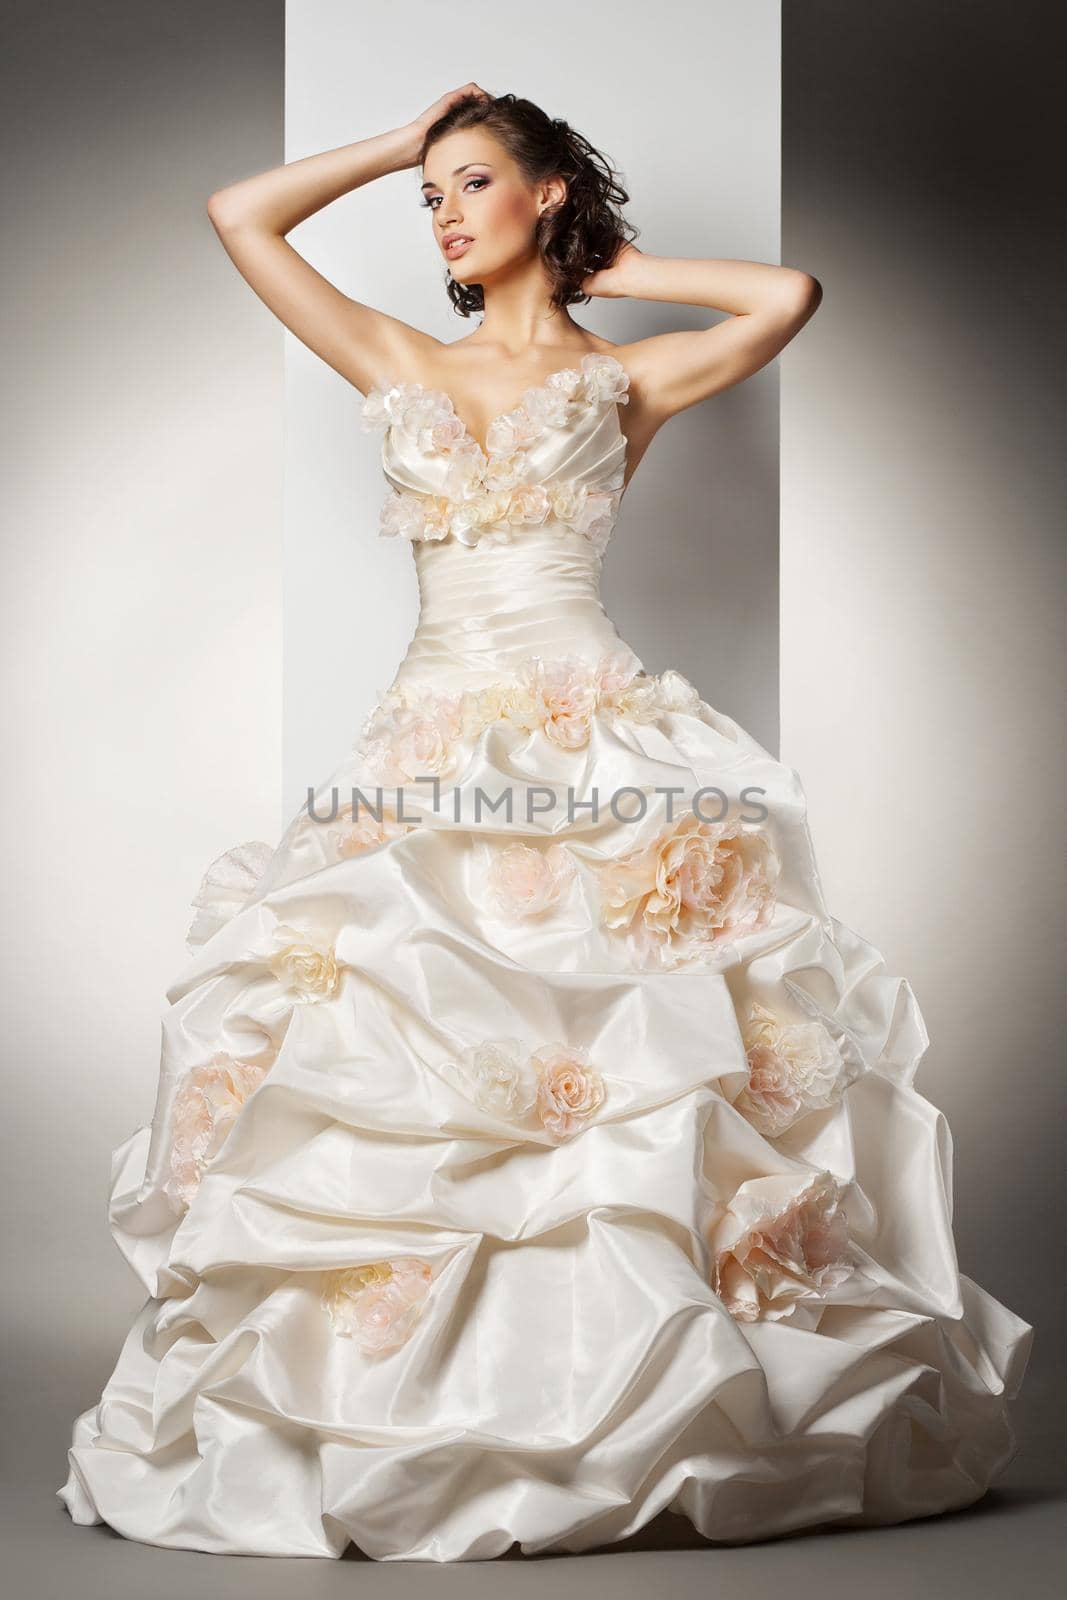 The beautiful young woman in a wedding dress by Julenochek